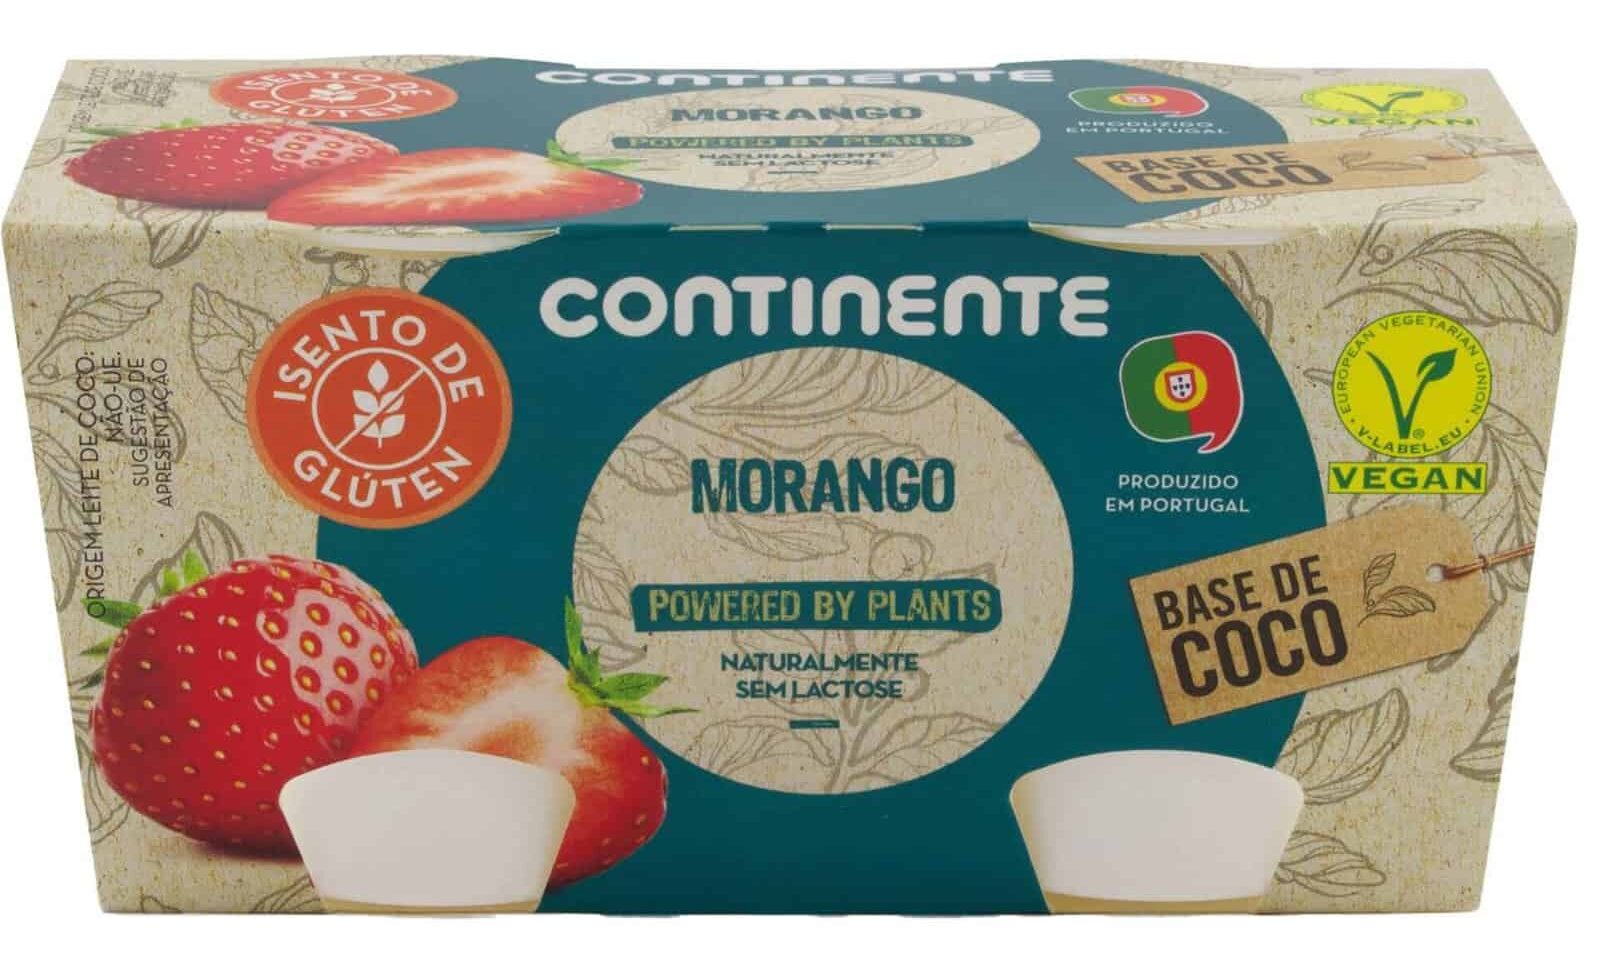 Portuguese supermarket chain Continente launches vegan yogurt